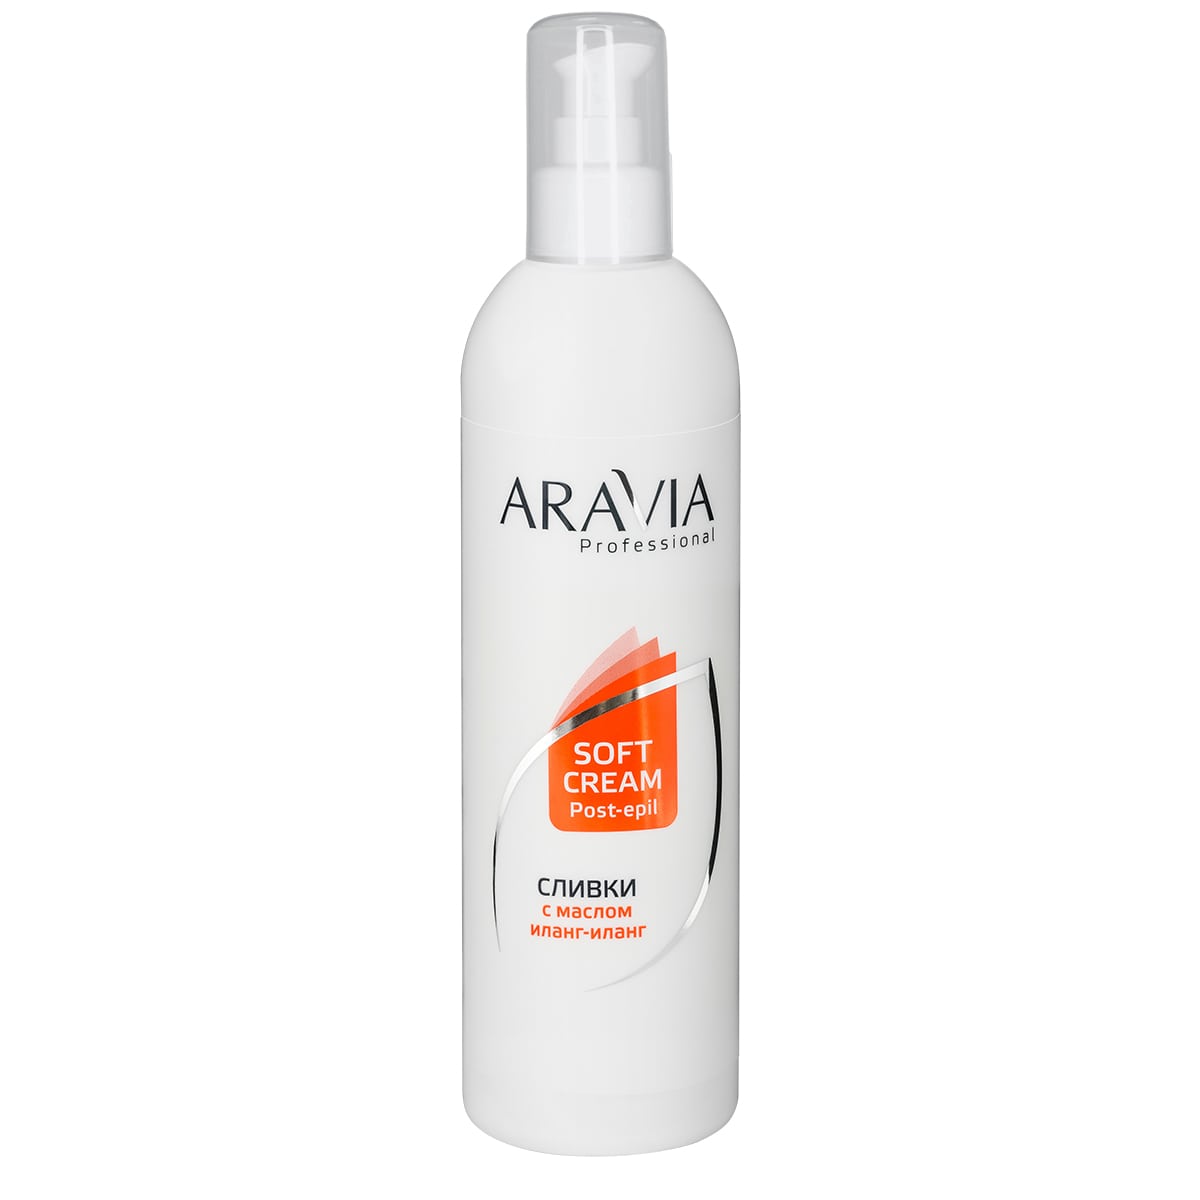 Aravia Professional Сливки для восстановления рН кожи с маслом иланг-иланг, 300мл